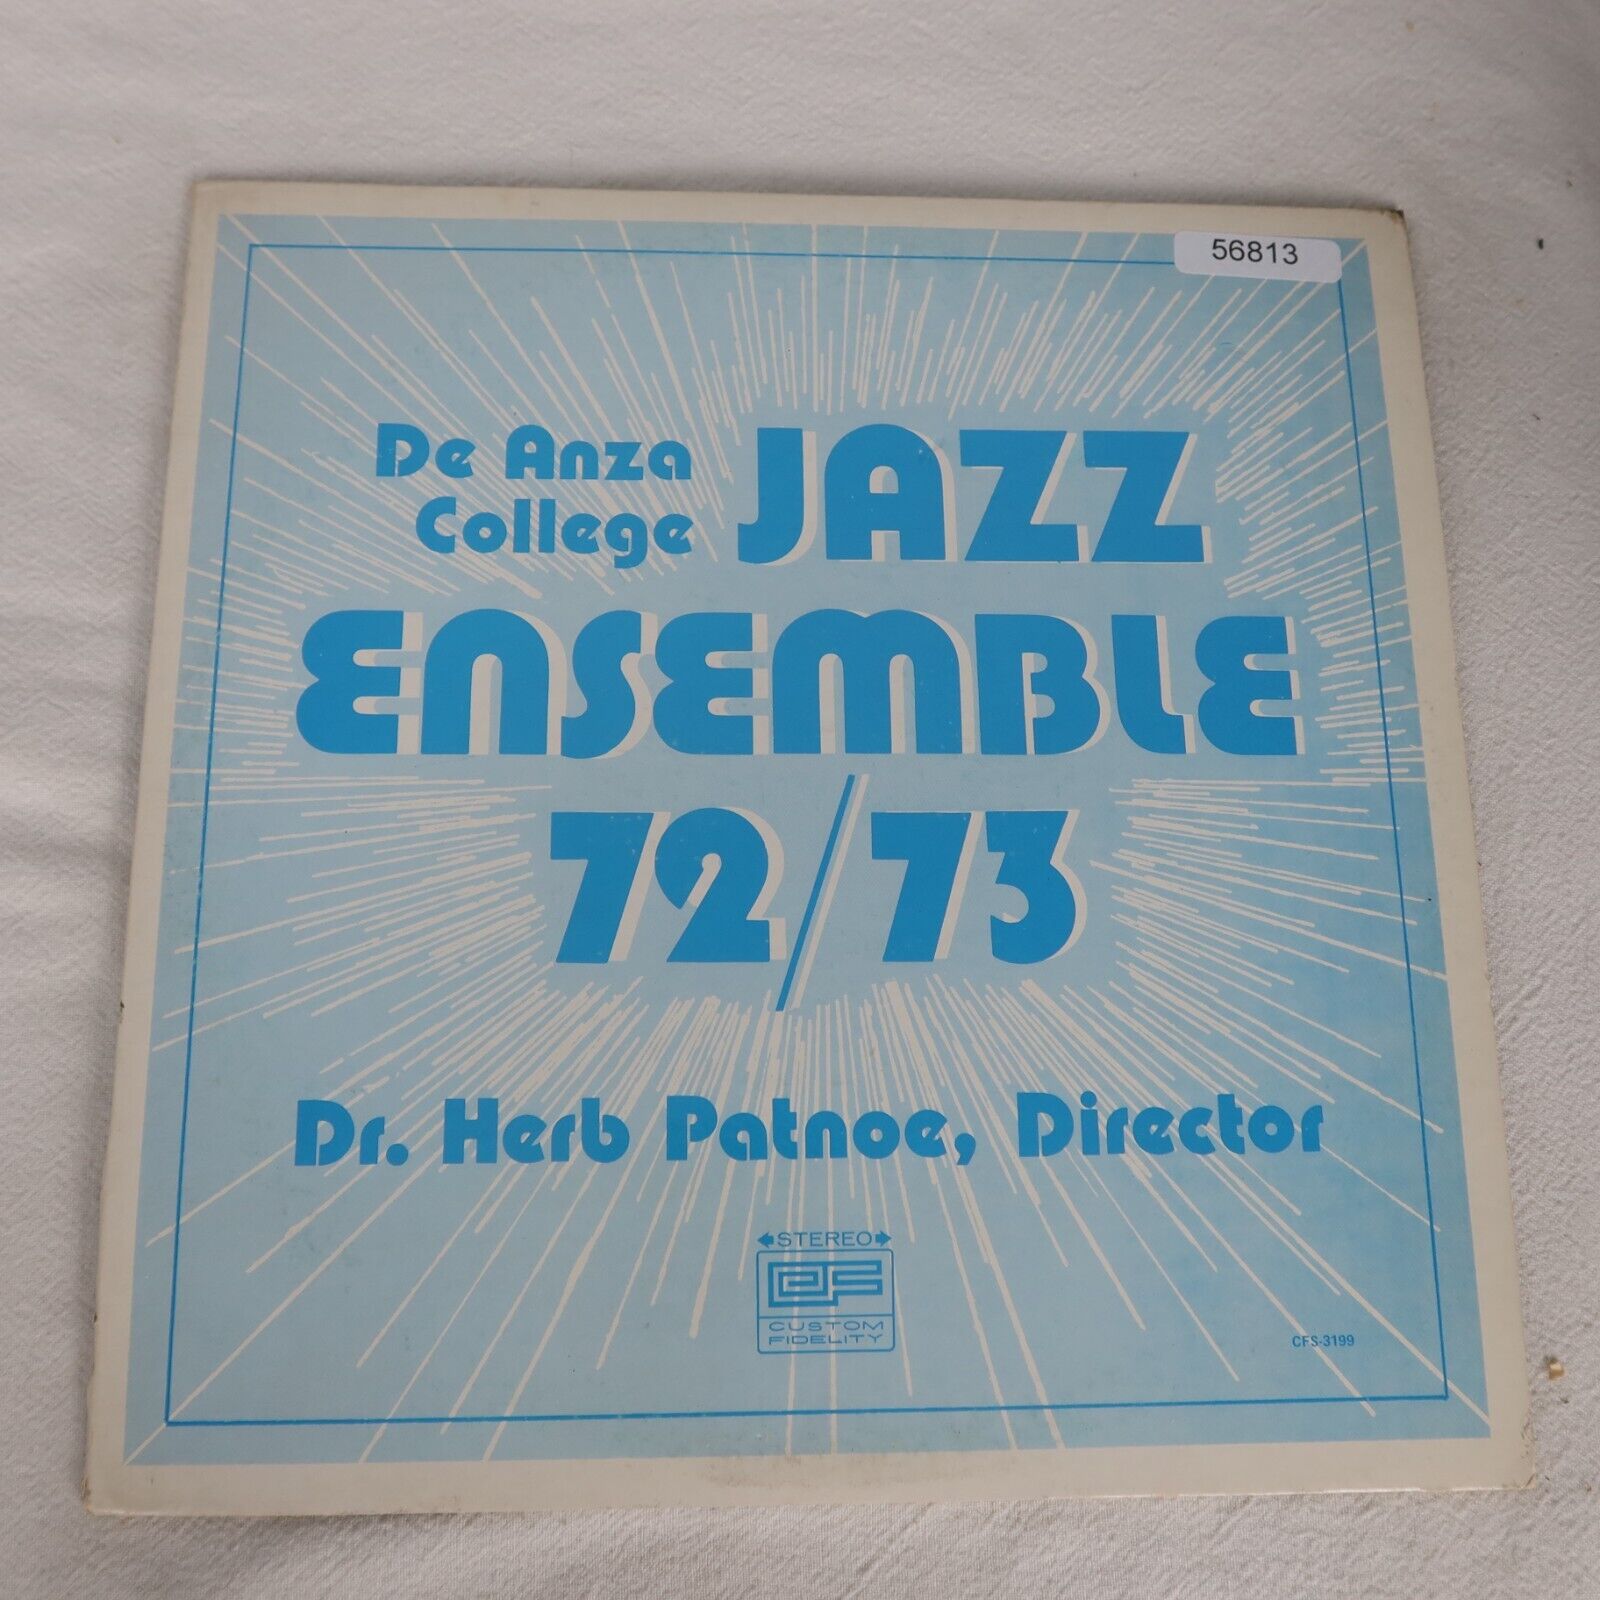 De Anza College Jazz Ensemble 1972 To 1973 LP Vinyl Record Album